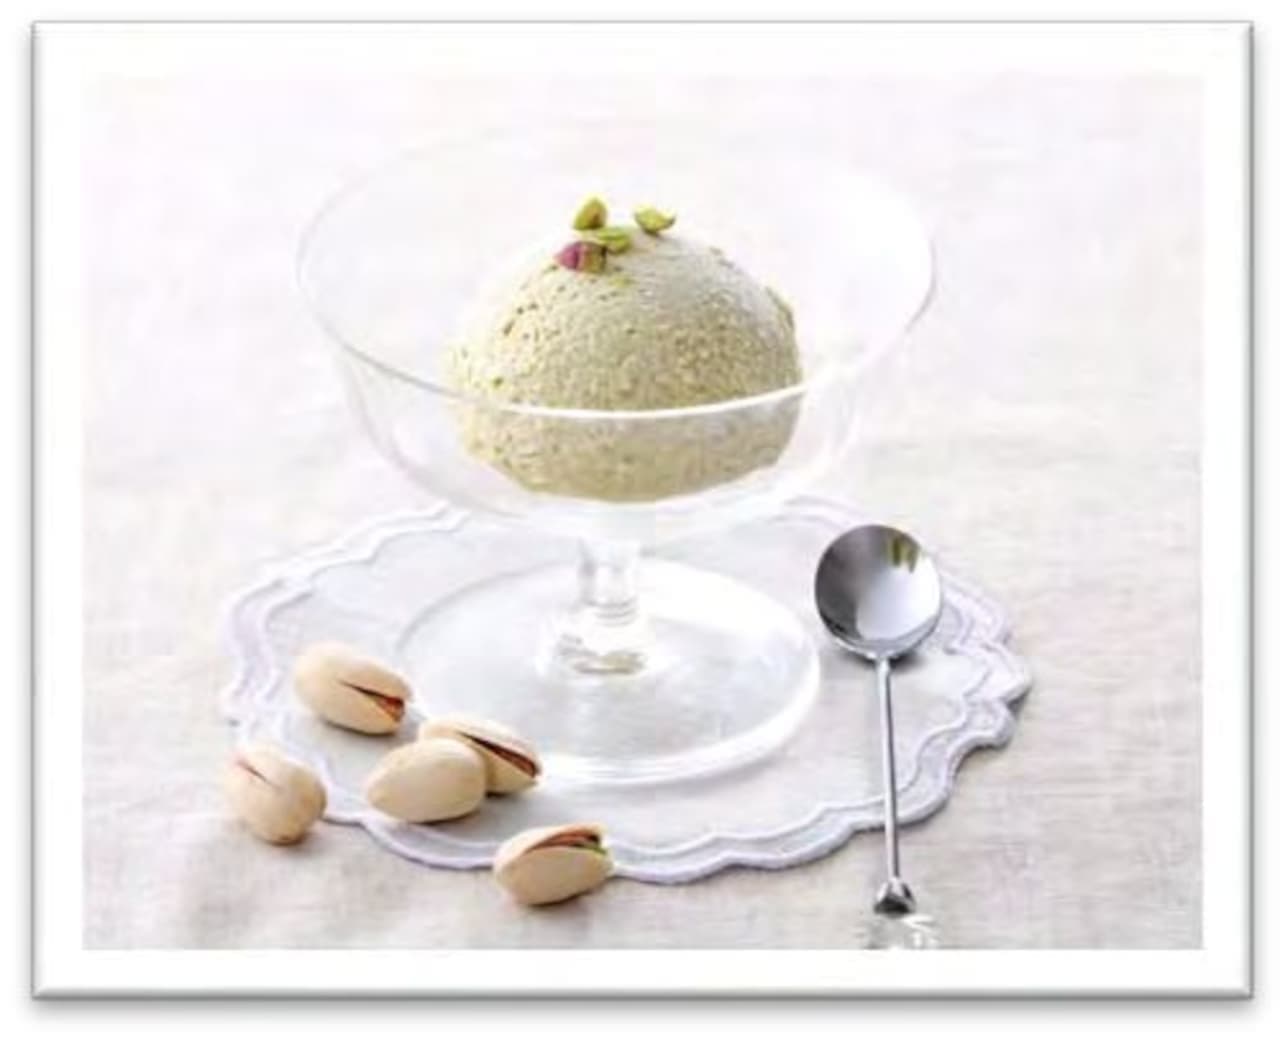 Maruetsu "Pistachio ice cream made by pistachio lovers"